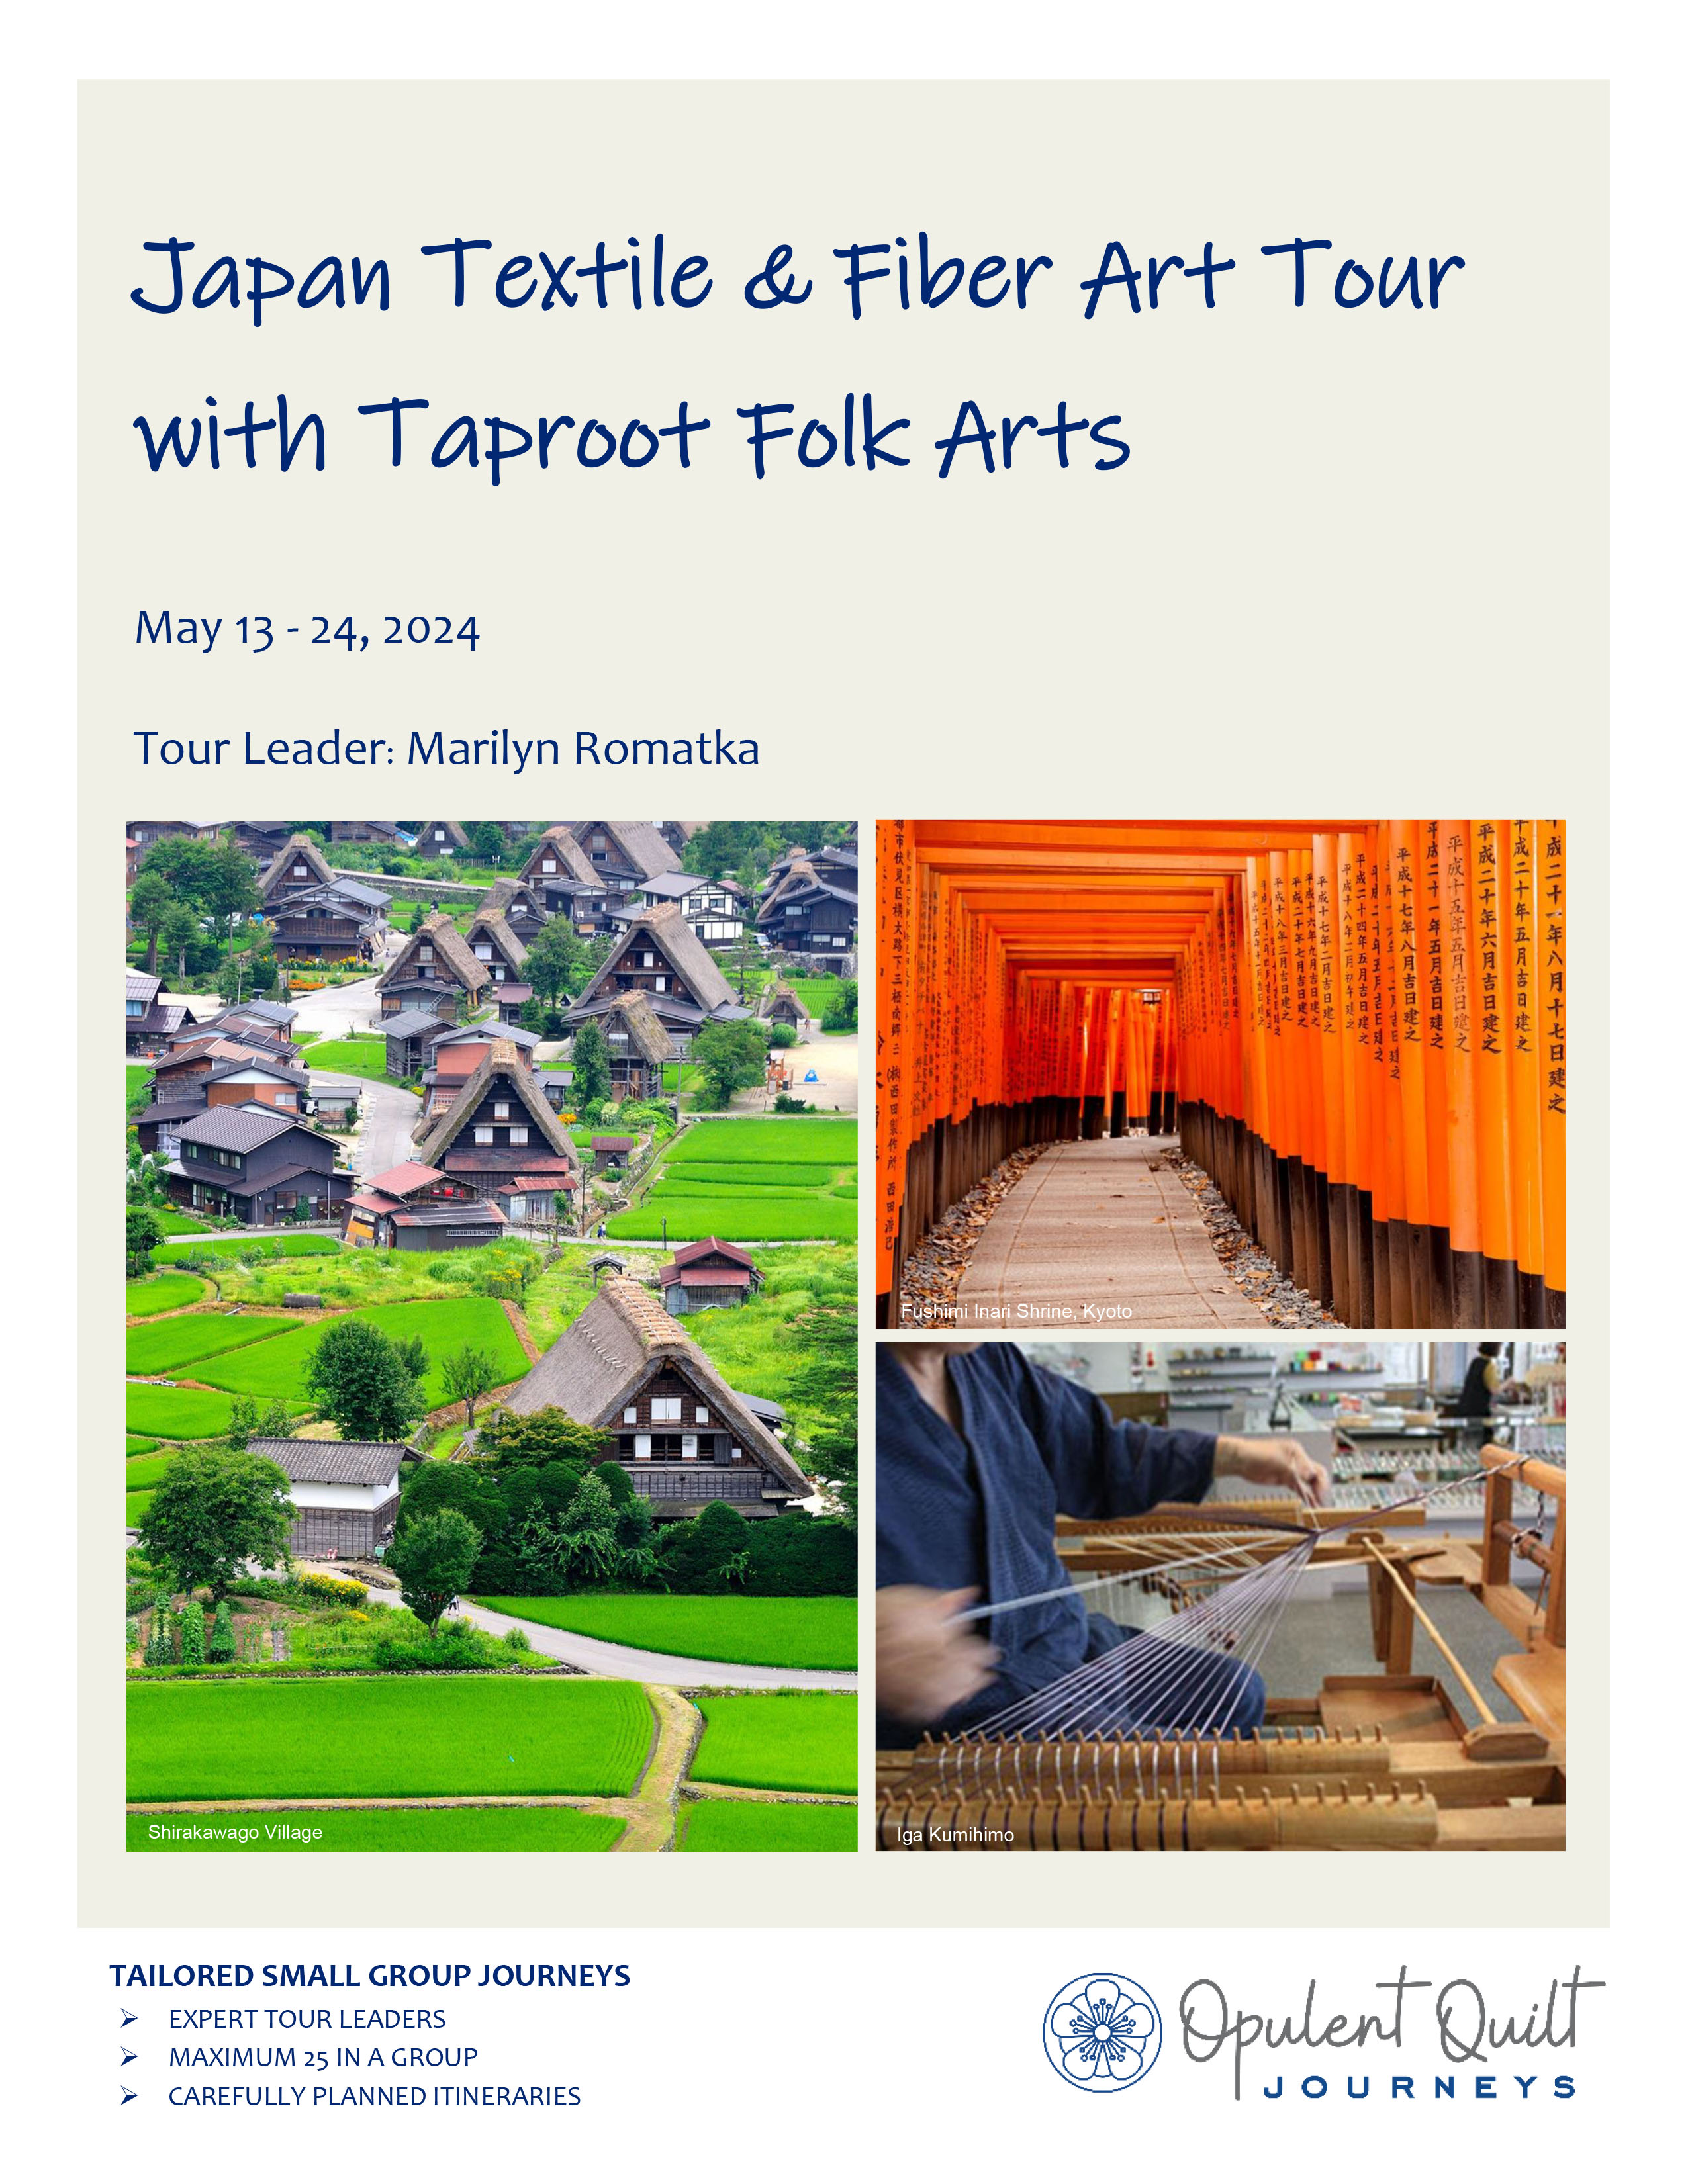 Japan Textile & Fiber Art Tour with Taproot Folk Arts